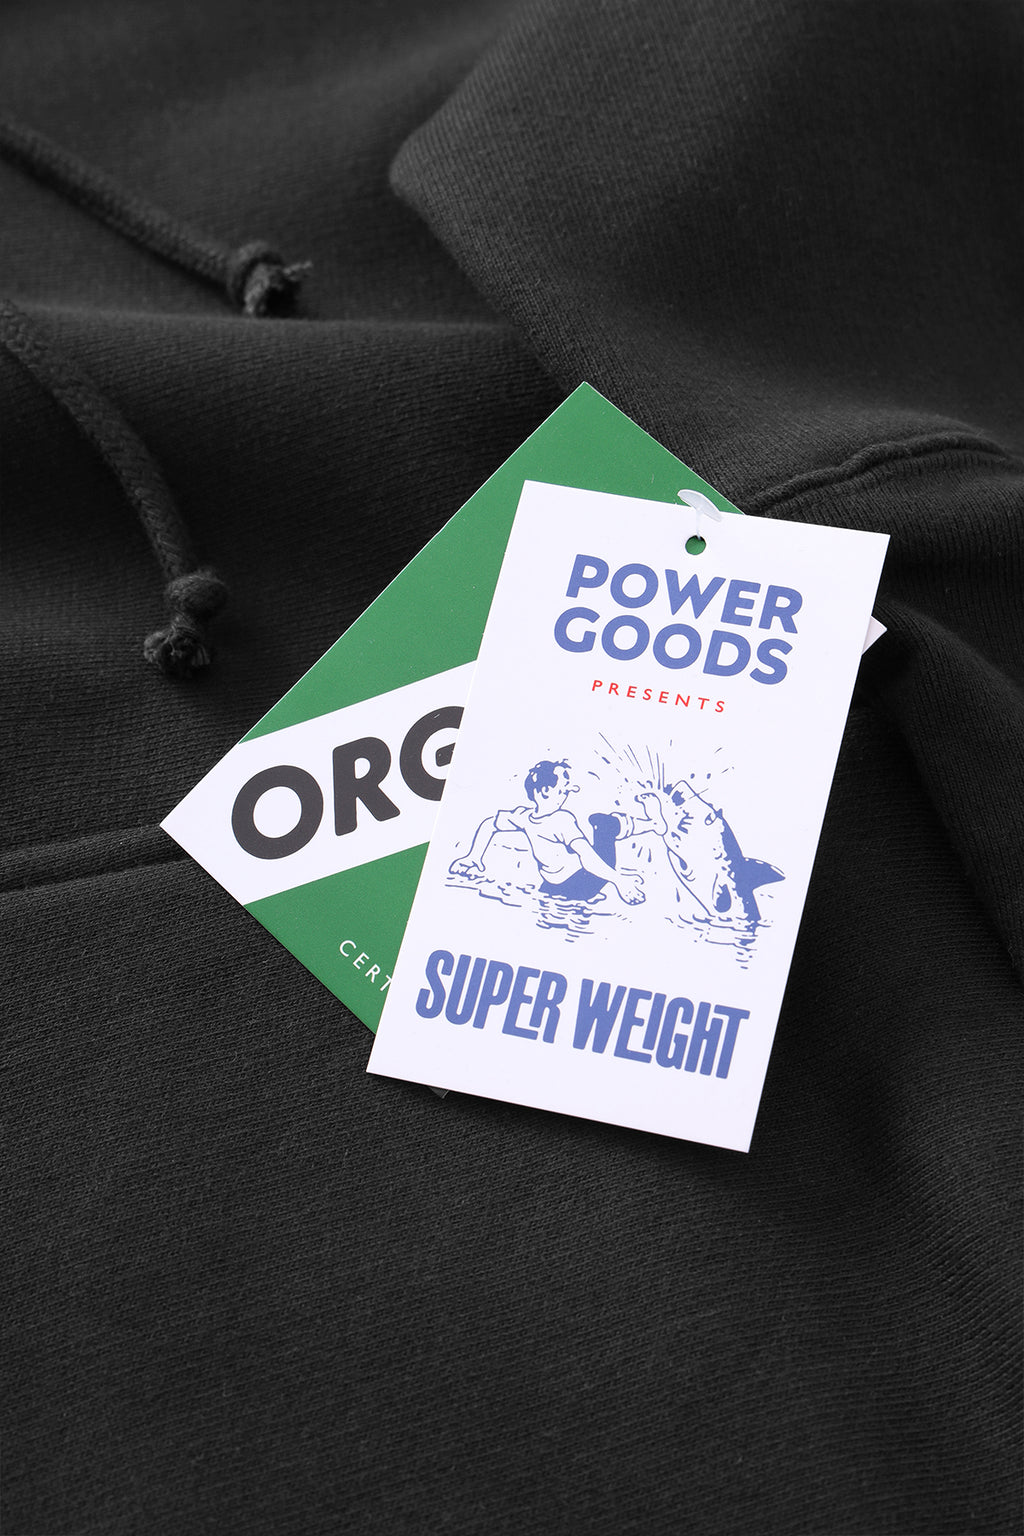 Power Goods - Super Weight Hoodie - Black